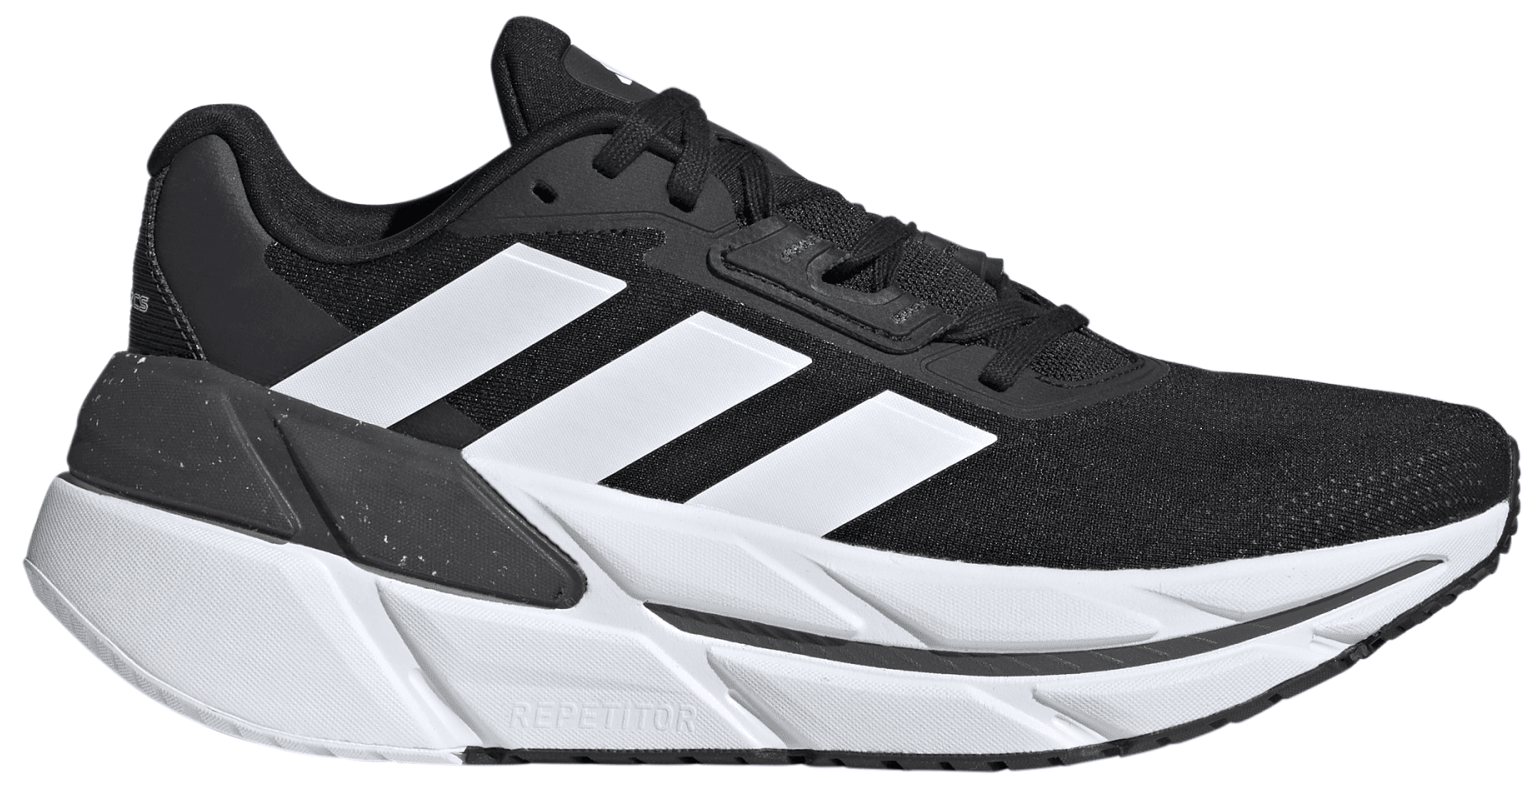 Adidas Men’s Adistar CS 2 Repetitor+ Running Shoes Cblack/Ftwwht/Carbon